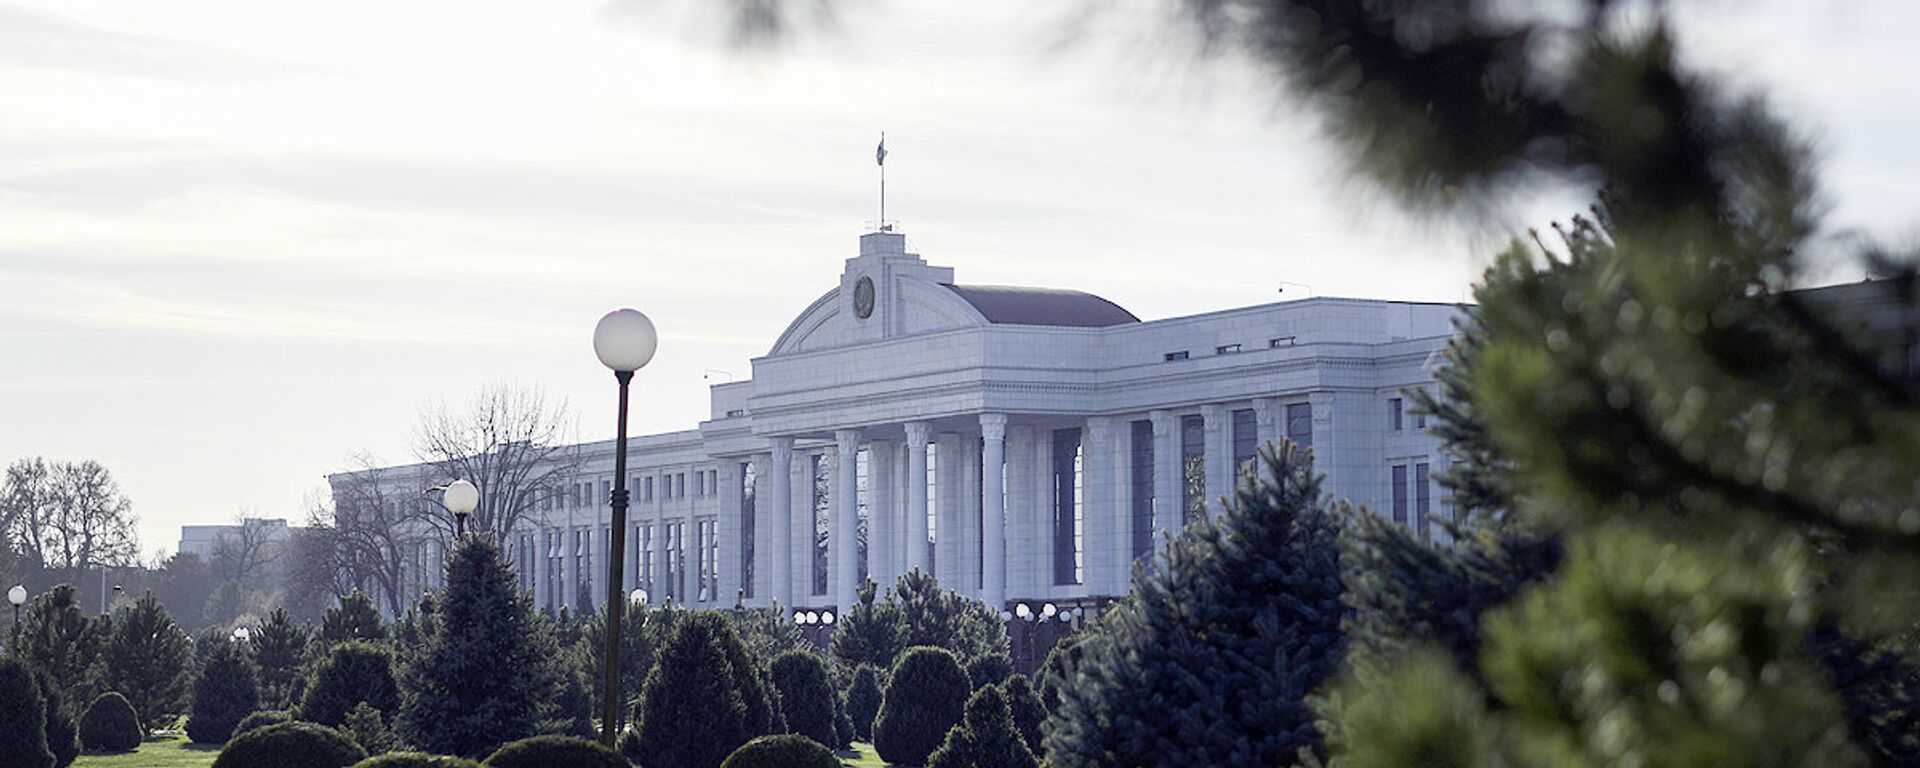 Здание Сената Олий Мажлиса Республики Узбекистан в Ташкенте - Sputnik Узбекистан, 1920, 25.06.2021